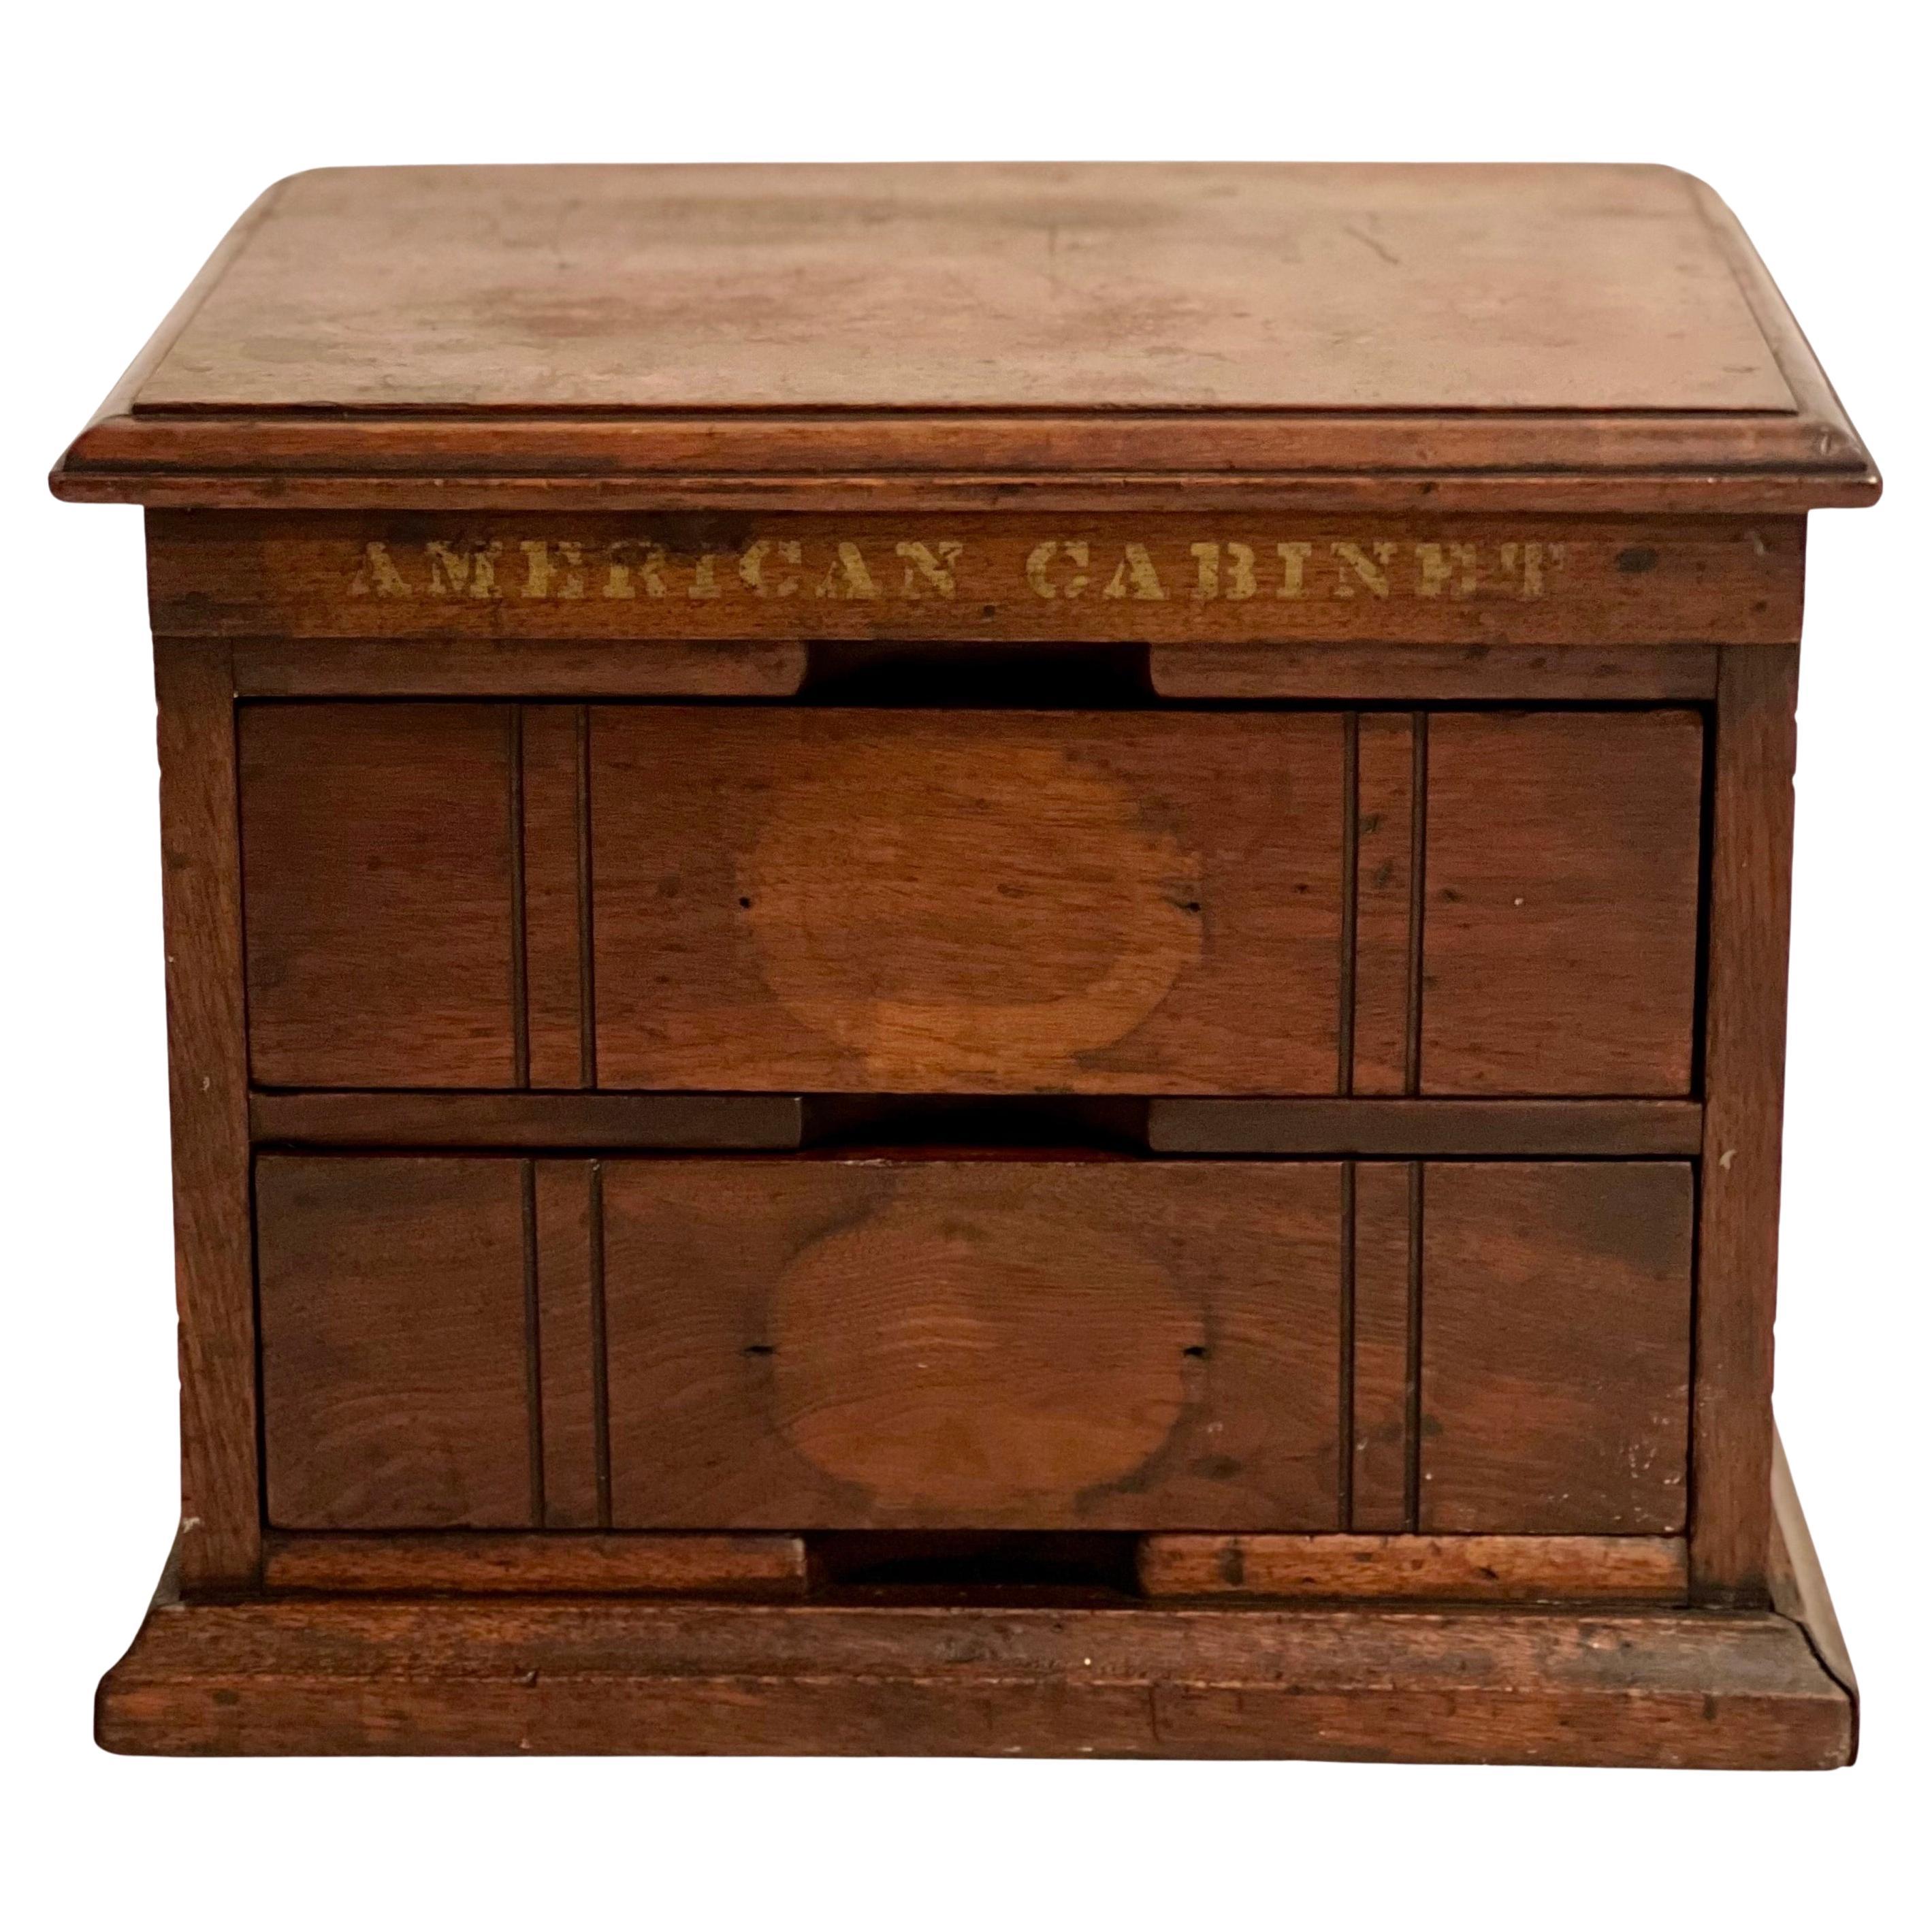 Antique Oak Desktop Letter File Cabinet by American Cabinet Co.